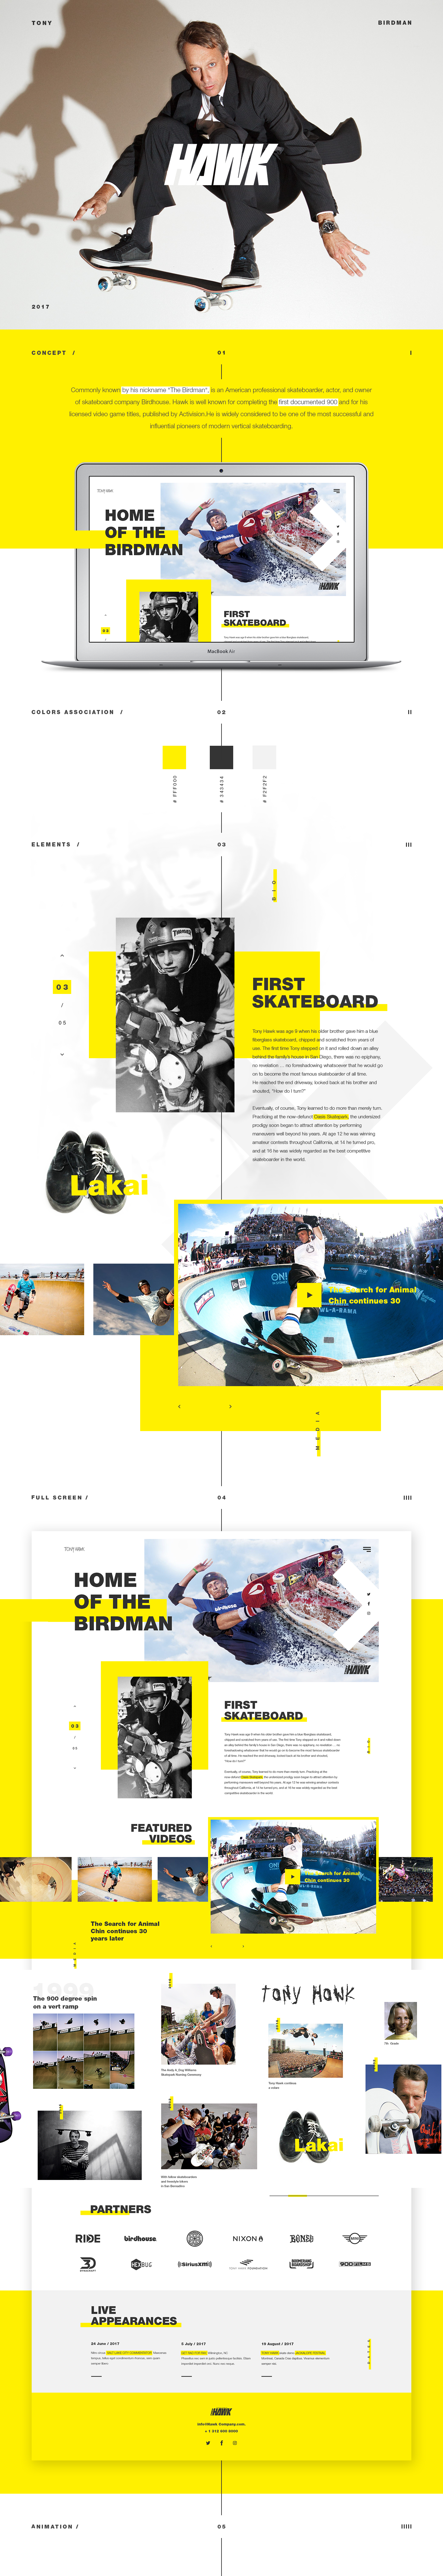 Webdesign UI ux site interaction page Web Adobe Photoshop design sport